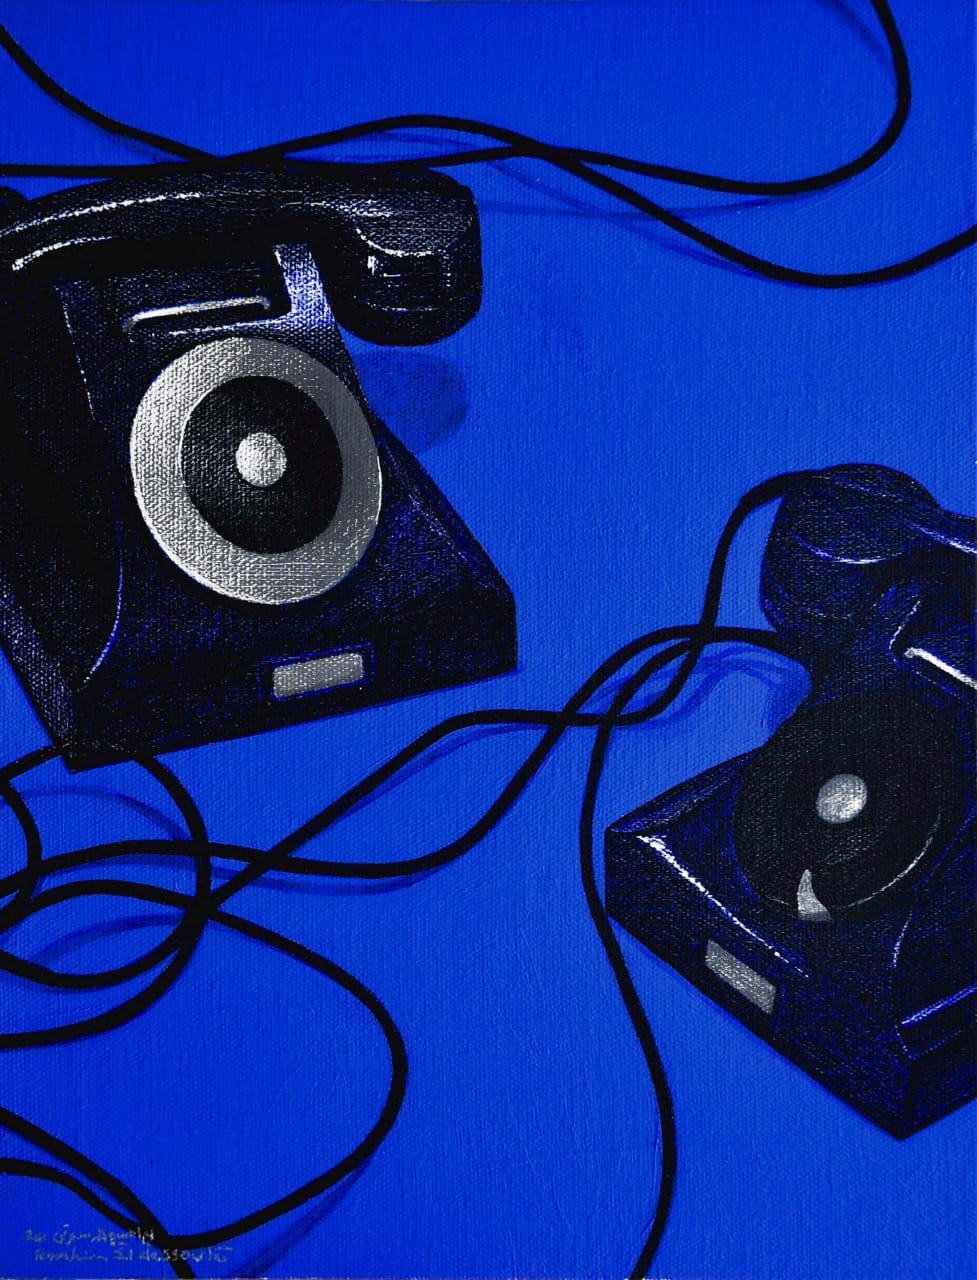 IBRAHIM EL DESSOUKI / Telephones, 2020 / 40 x 30 cm / Oil on canvas mounted on board / USD 6,000 / PALESTINE-134